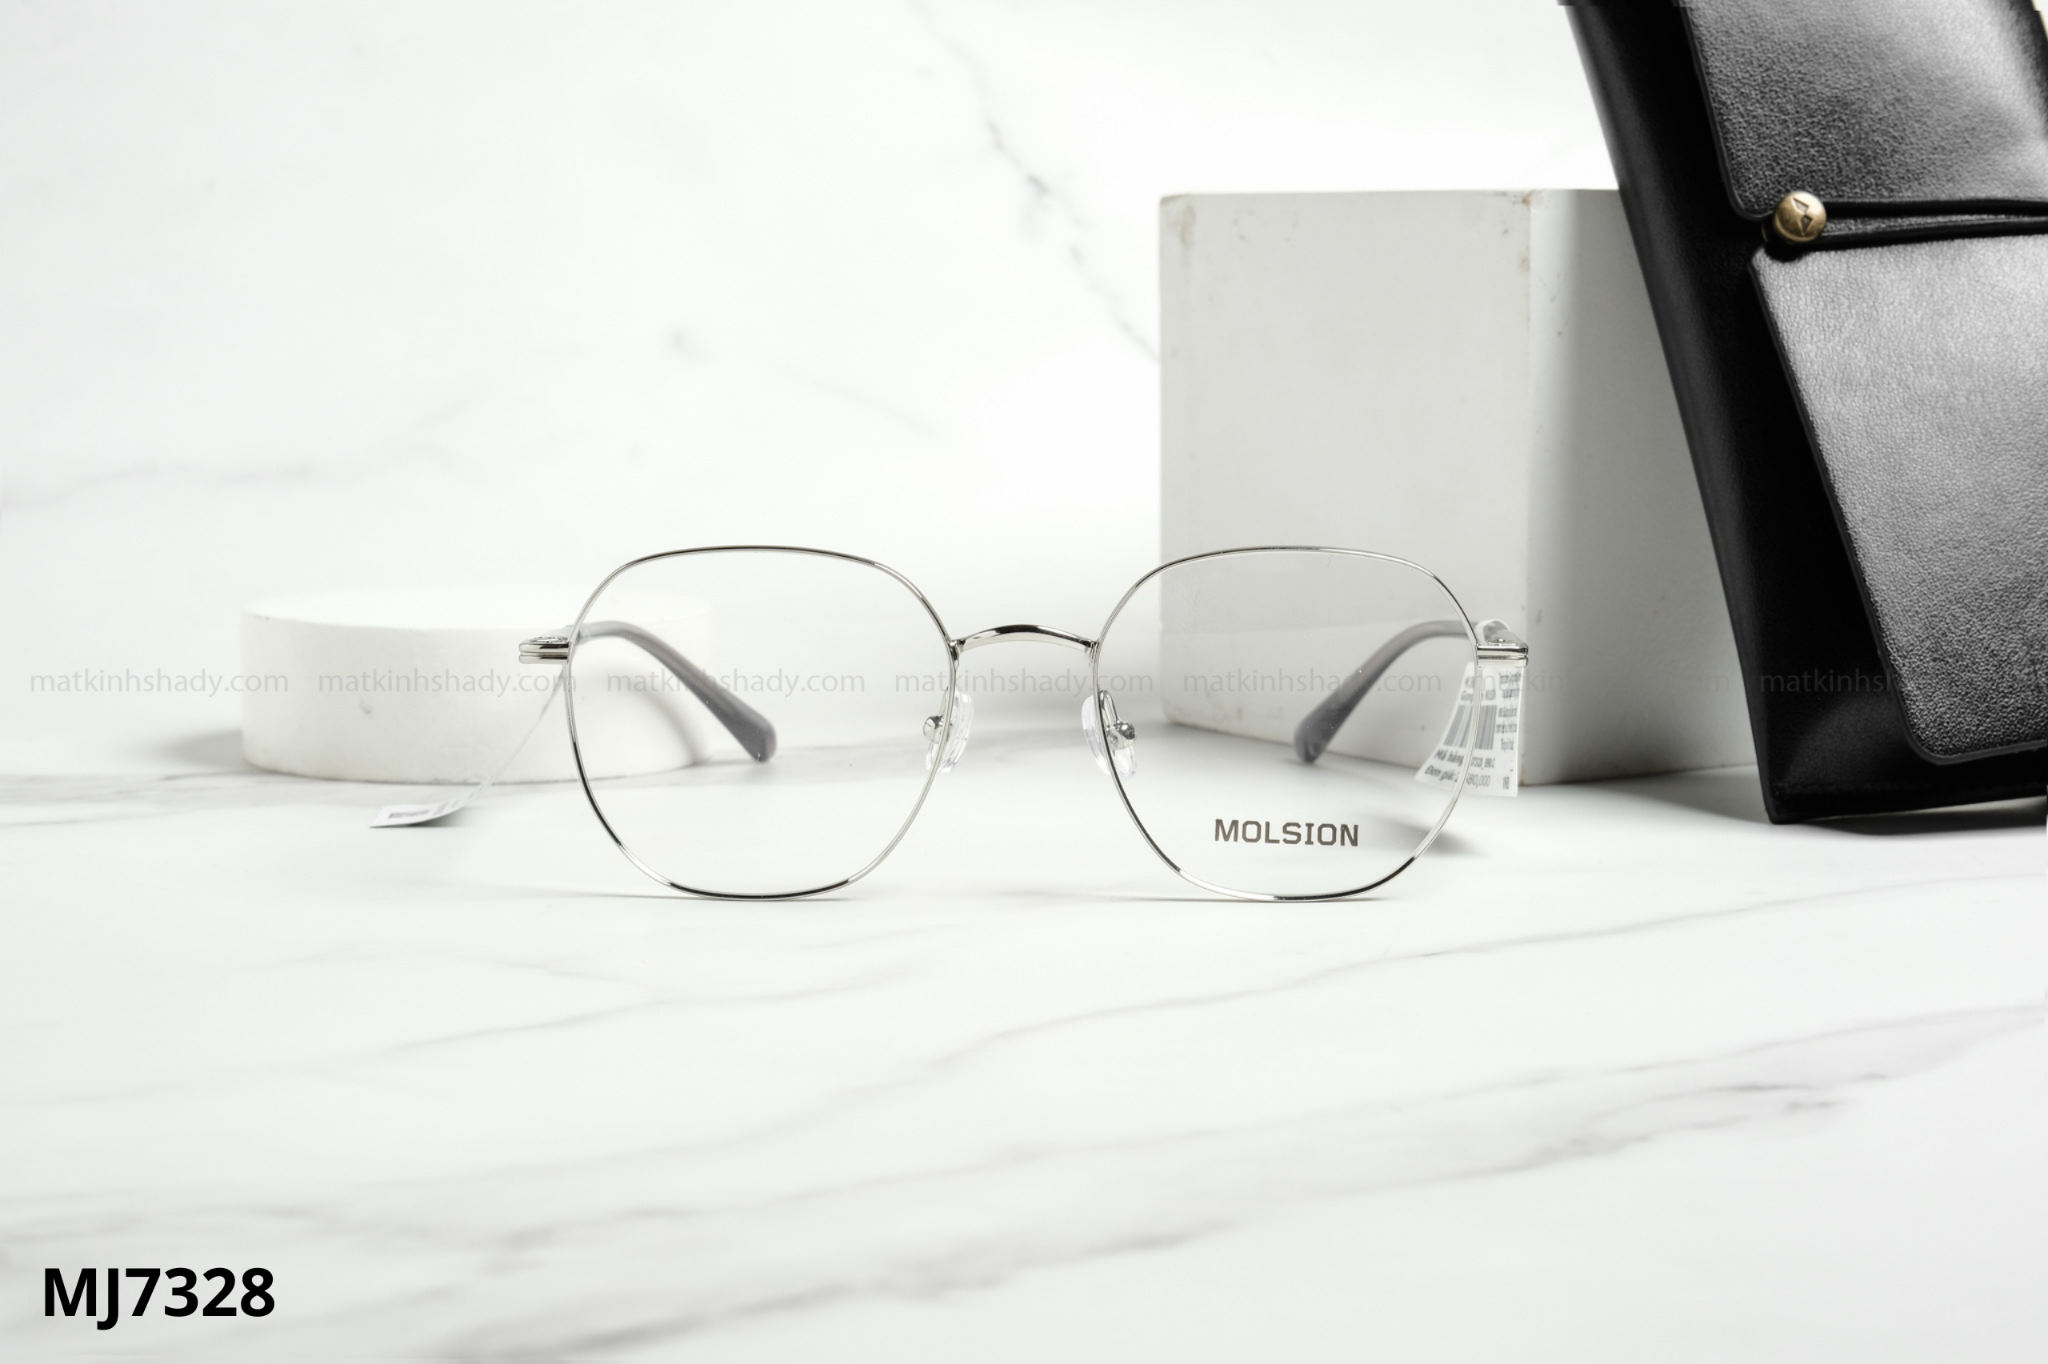  Molsion Eyewear - Glasses - MJ7328 